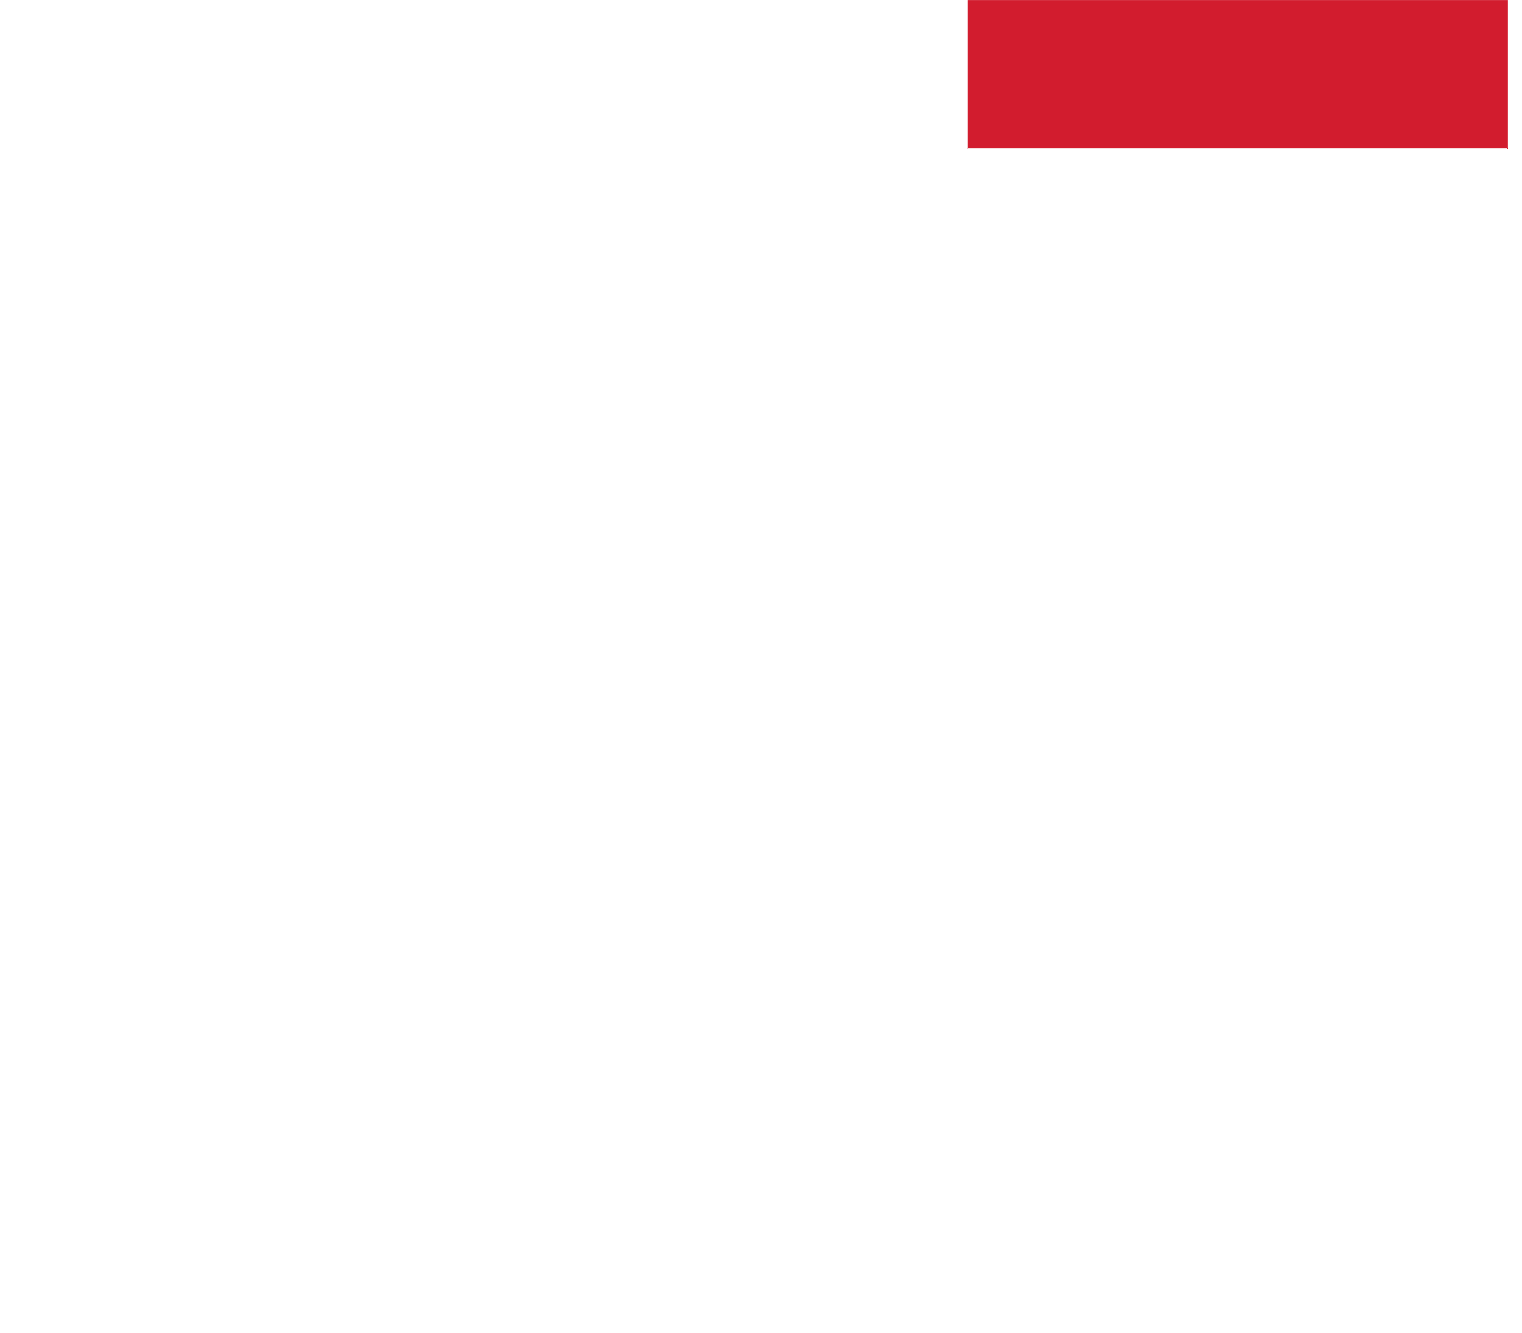 Cadence Design Systems logo pour fonds sombres (PNG transparent)